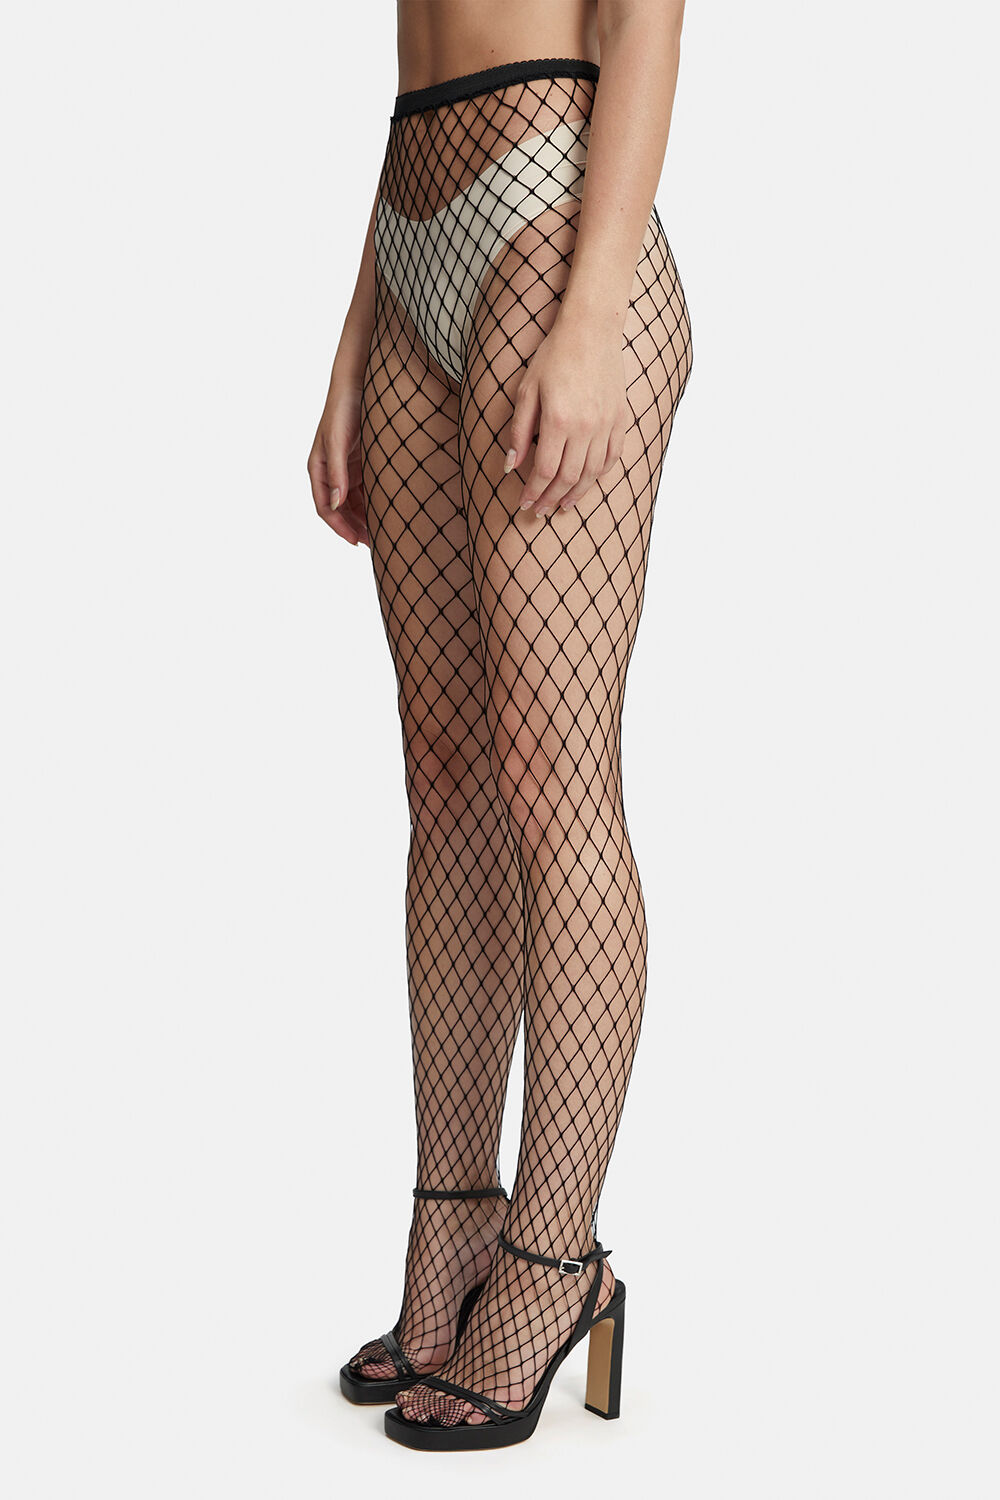 Glitter Fishnet Tight – Femmebot Clothing